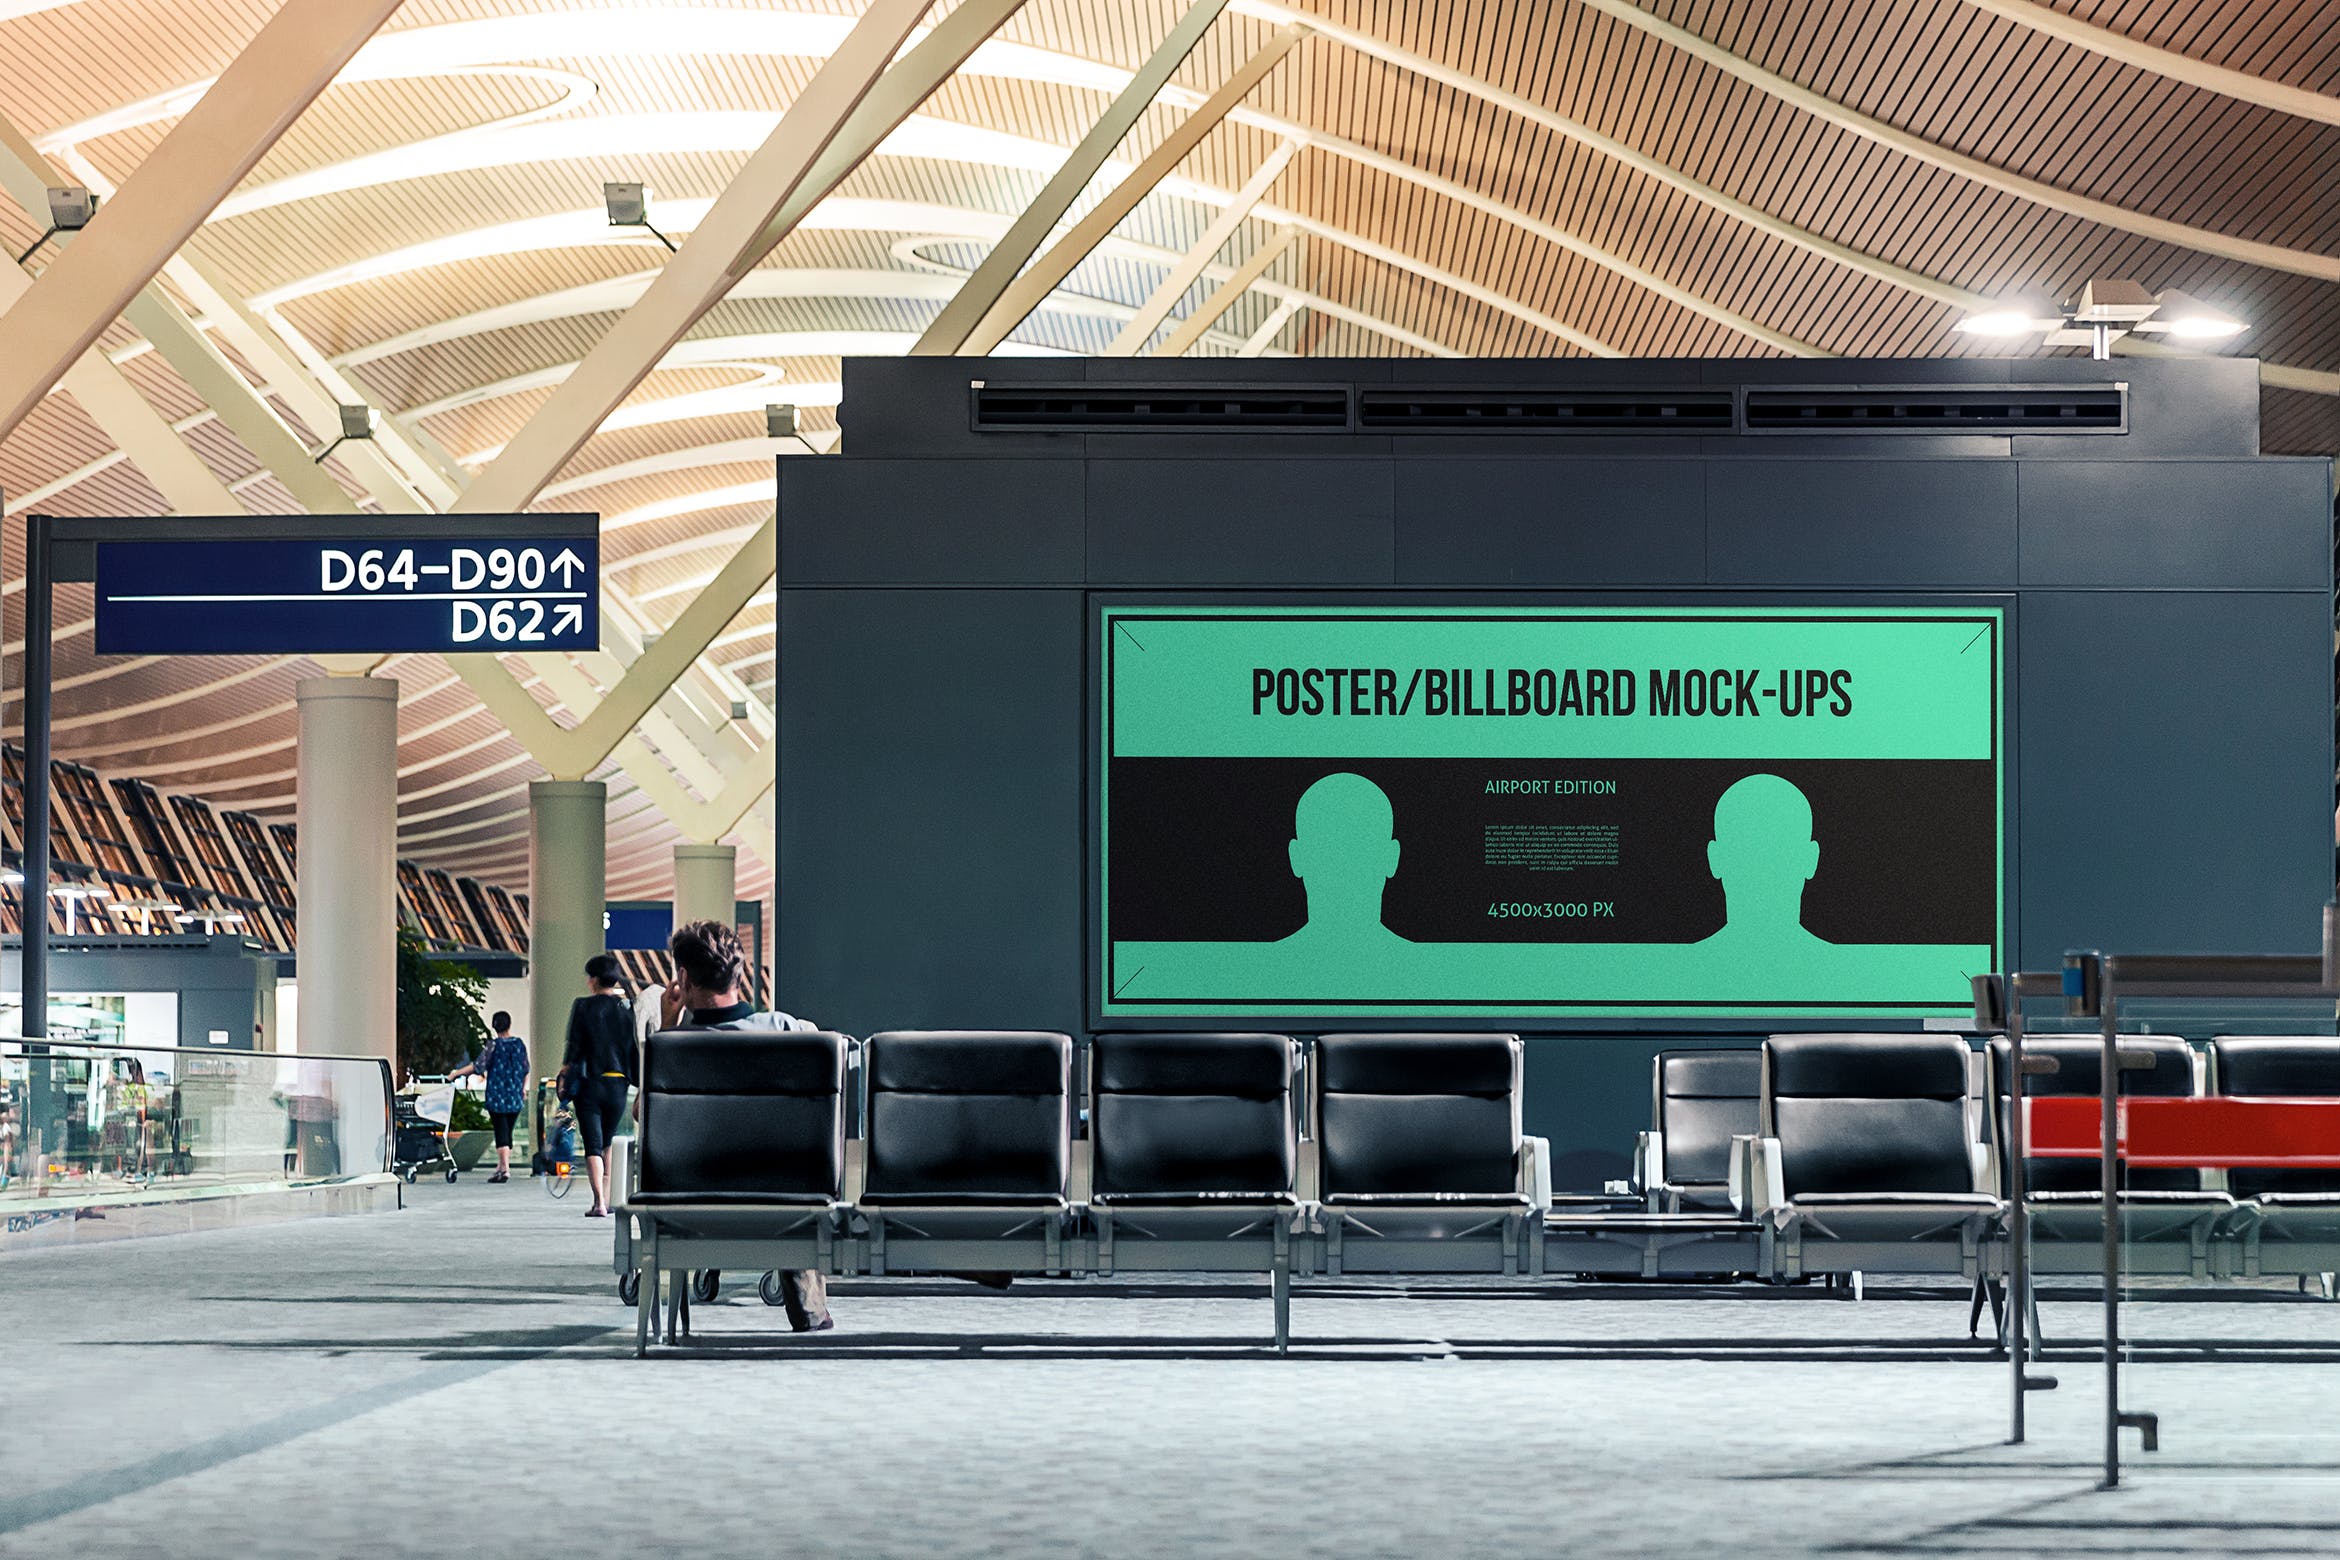 机场候机室海报/广告牌样机第一素材精选模板#4 Poster / Billboard Mock-ups – Airport Edition #4插图